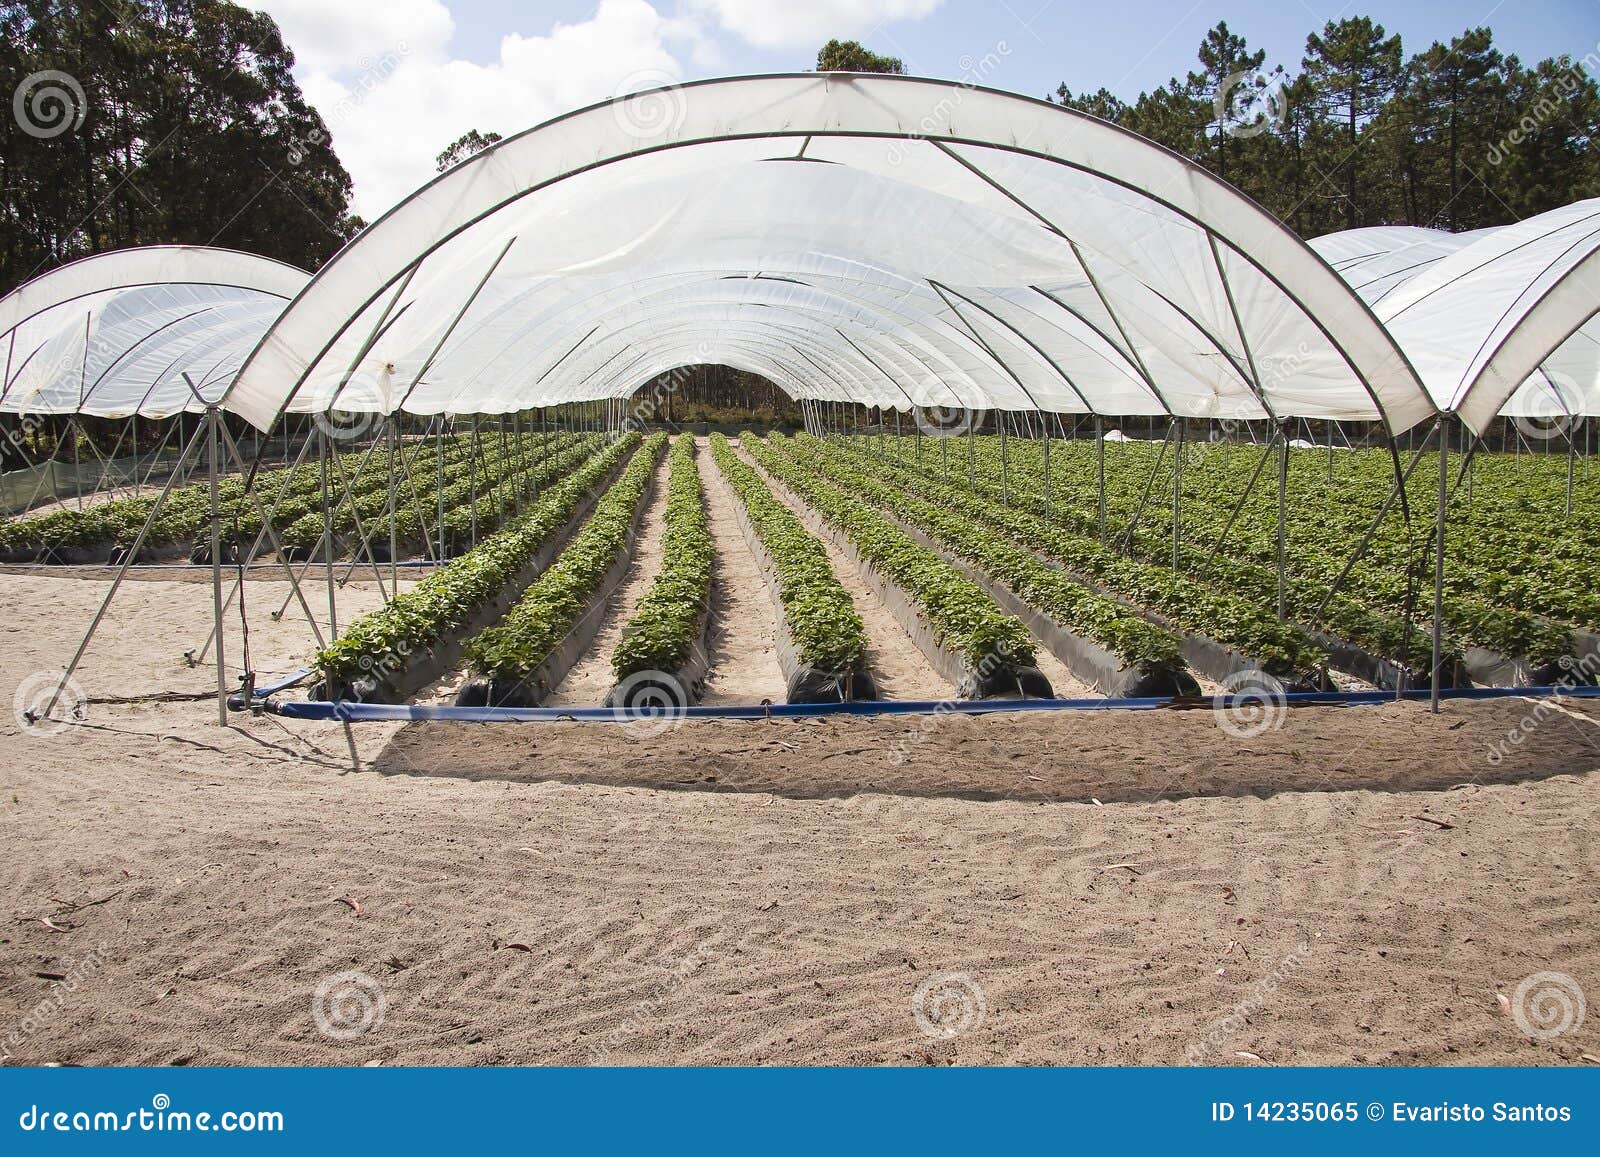 greenhouses holding strawberries